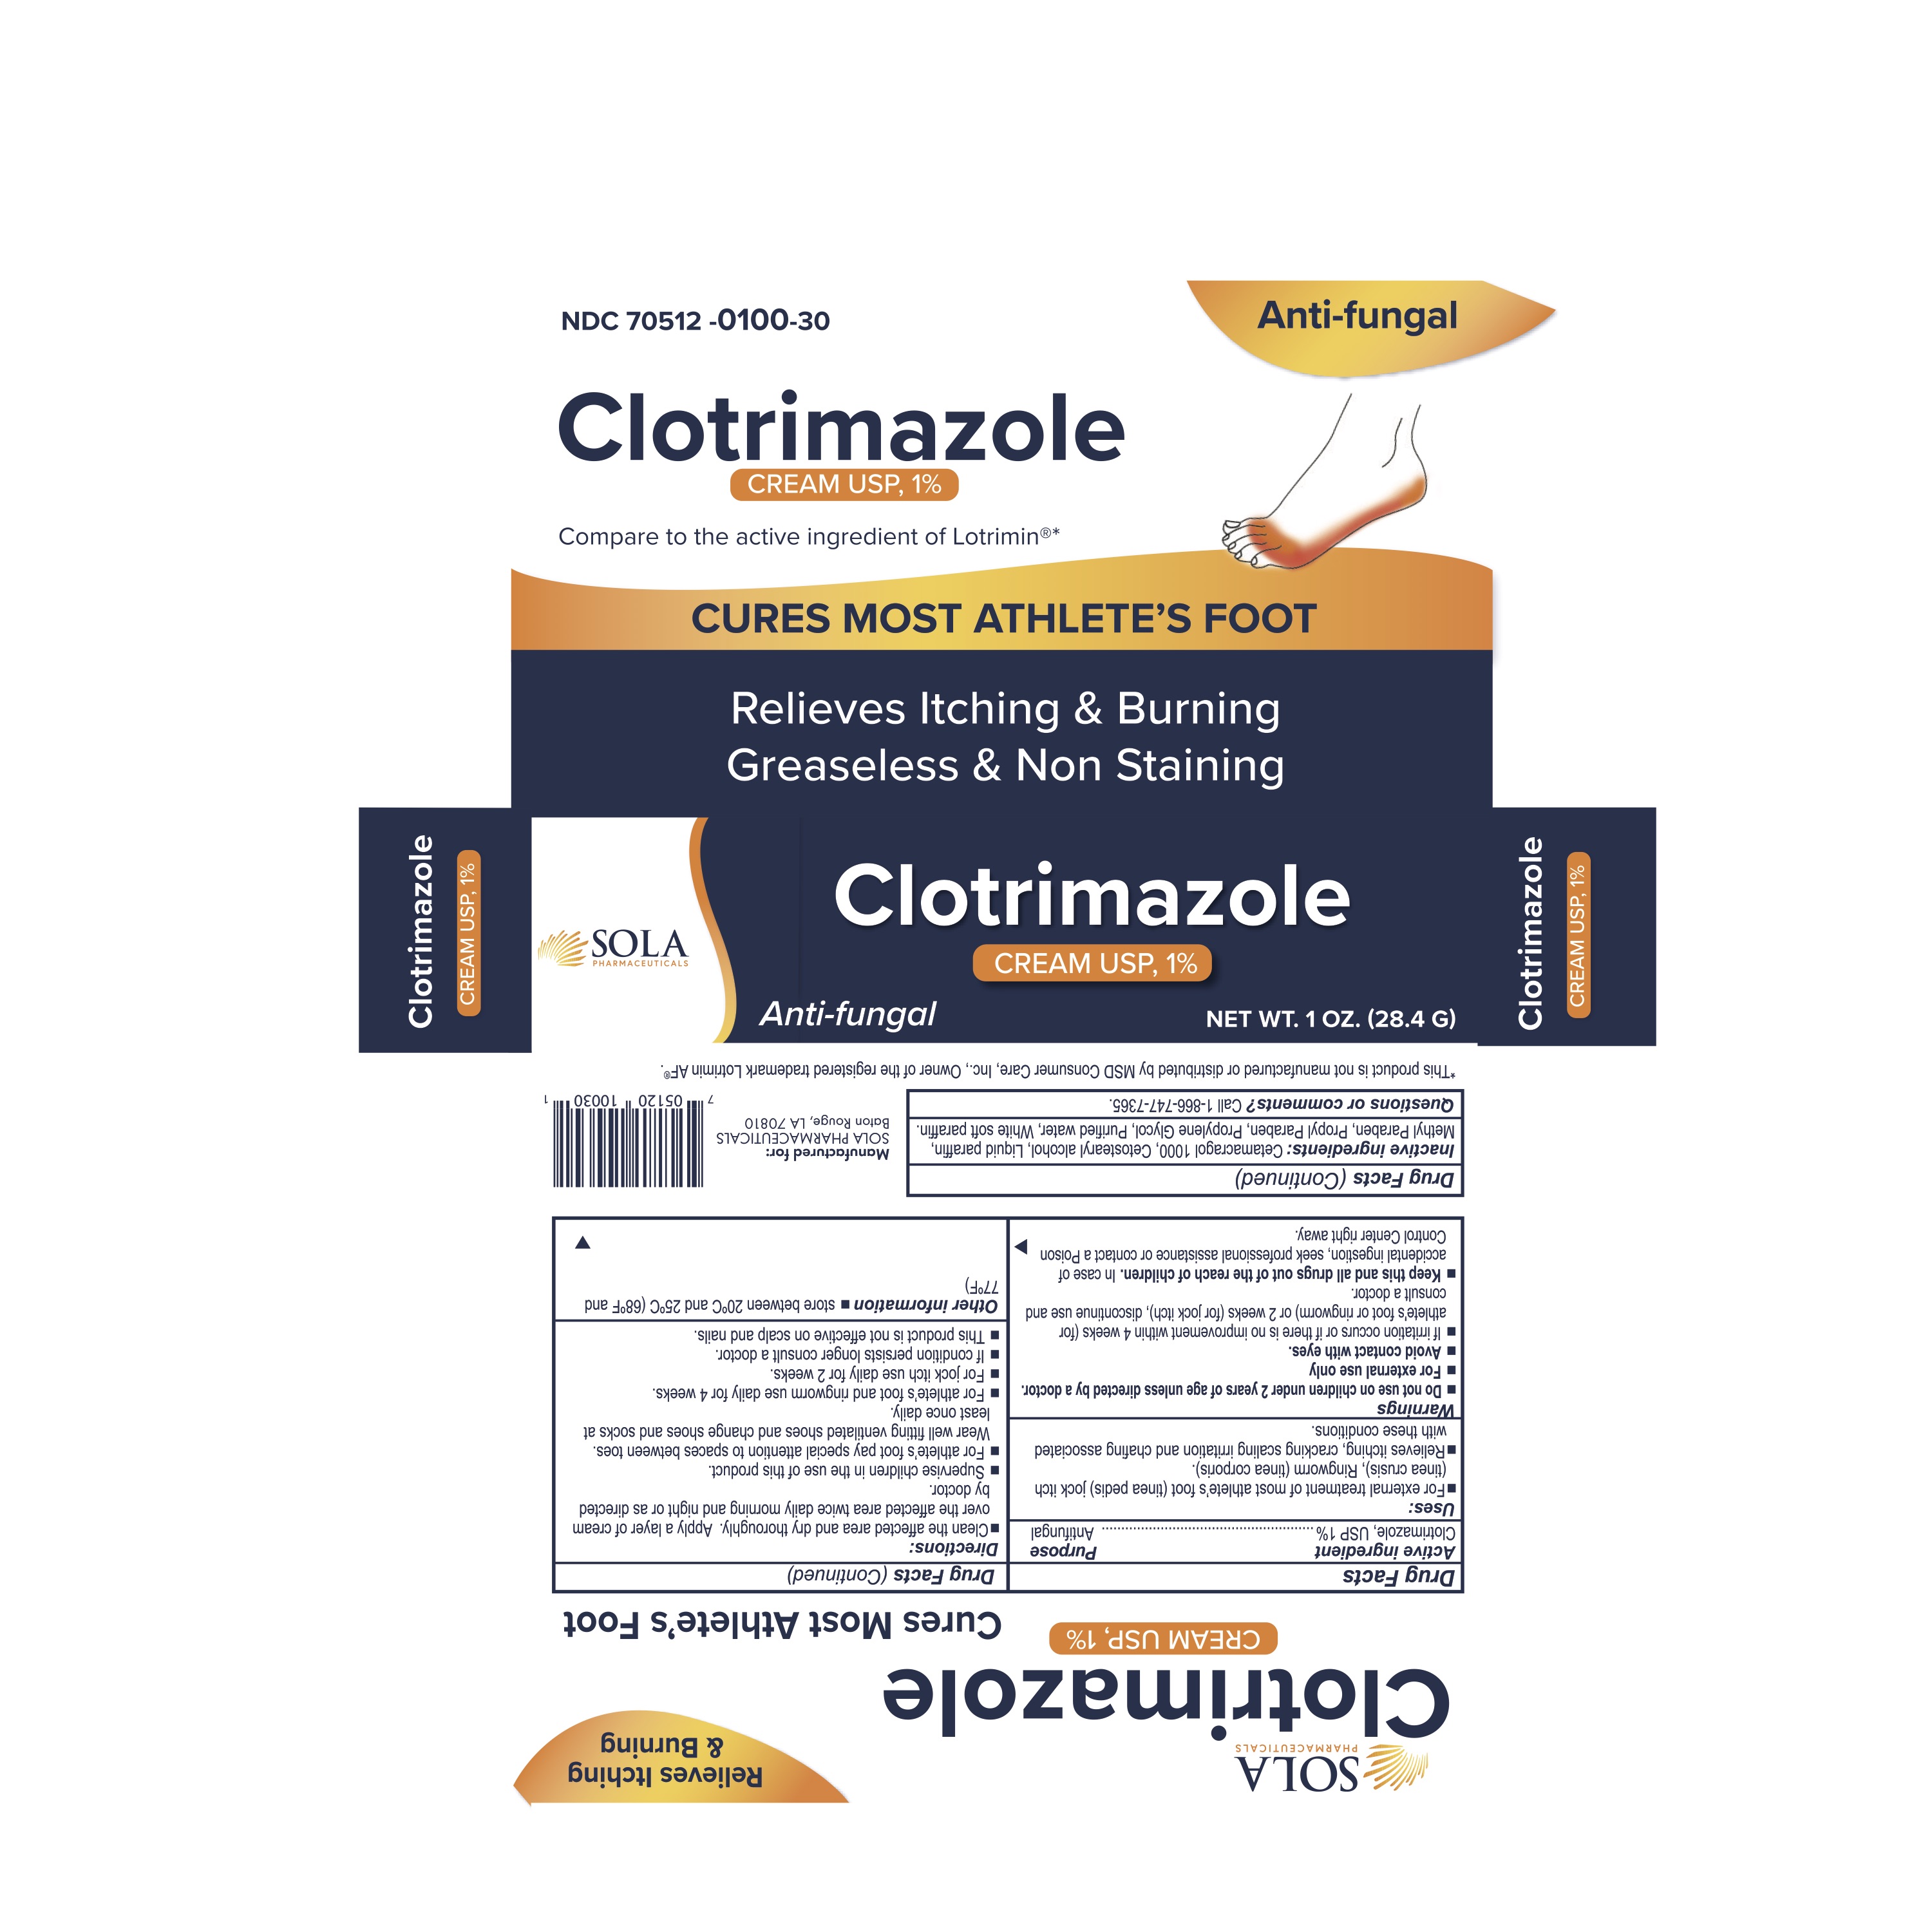 Clotrimazole AF box